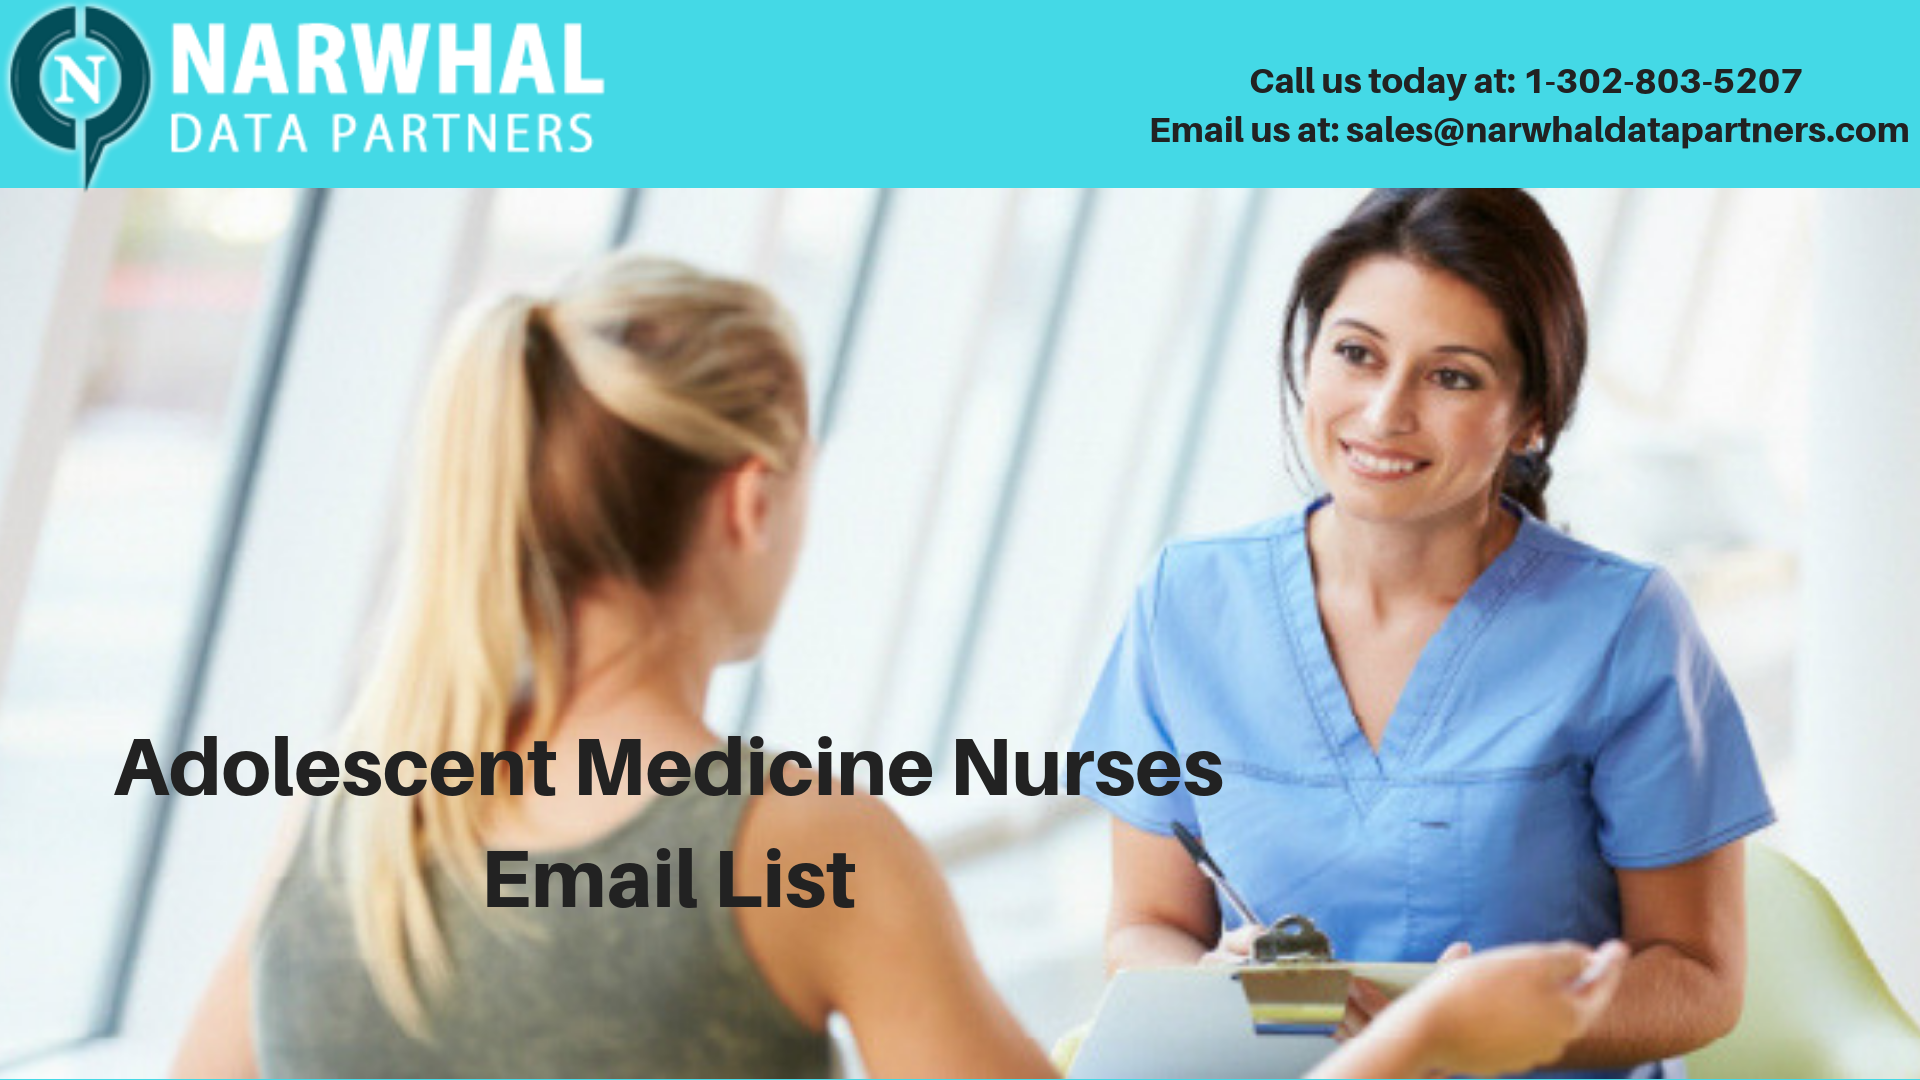 http://narwhaldatapartners.com/adolescent-medicine-nurses-email-list.html